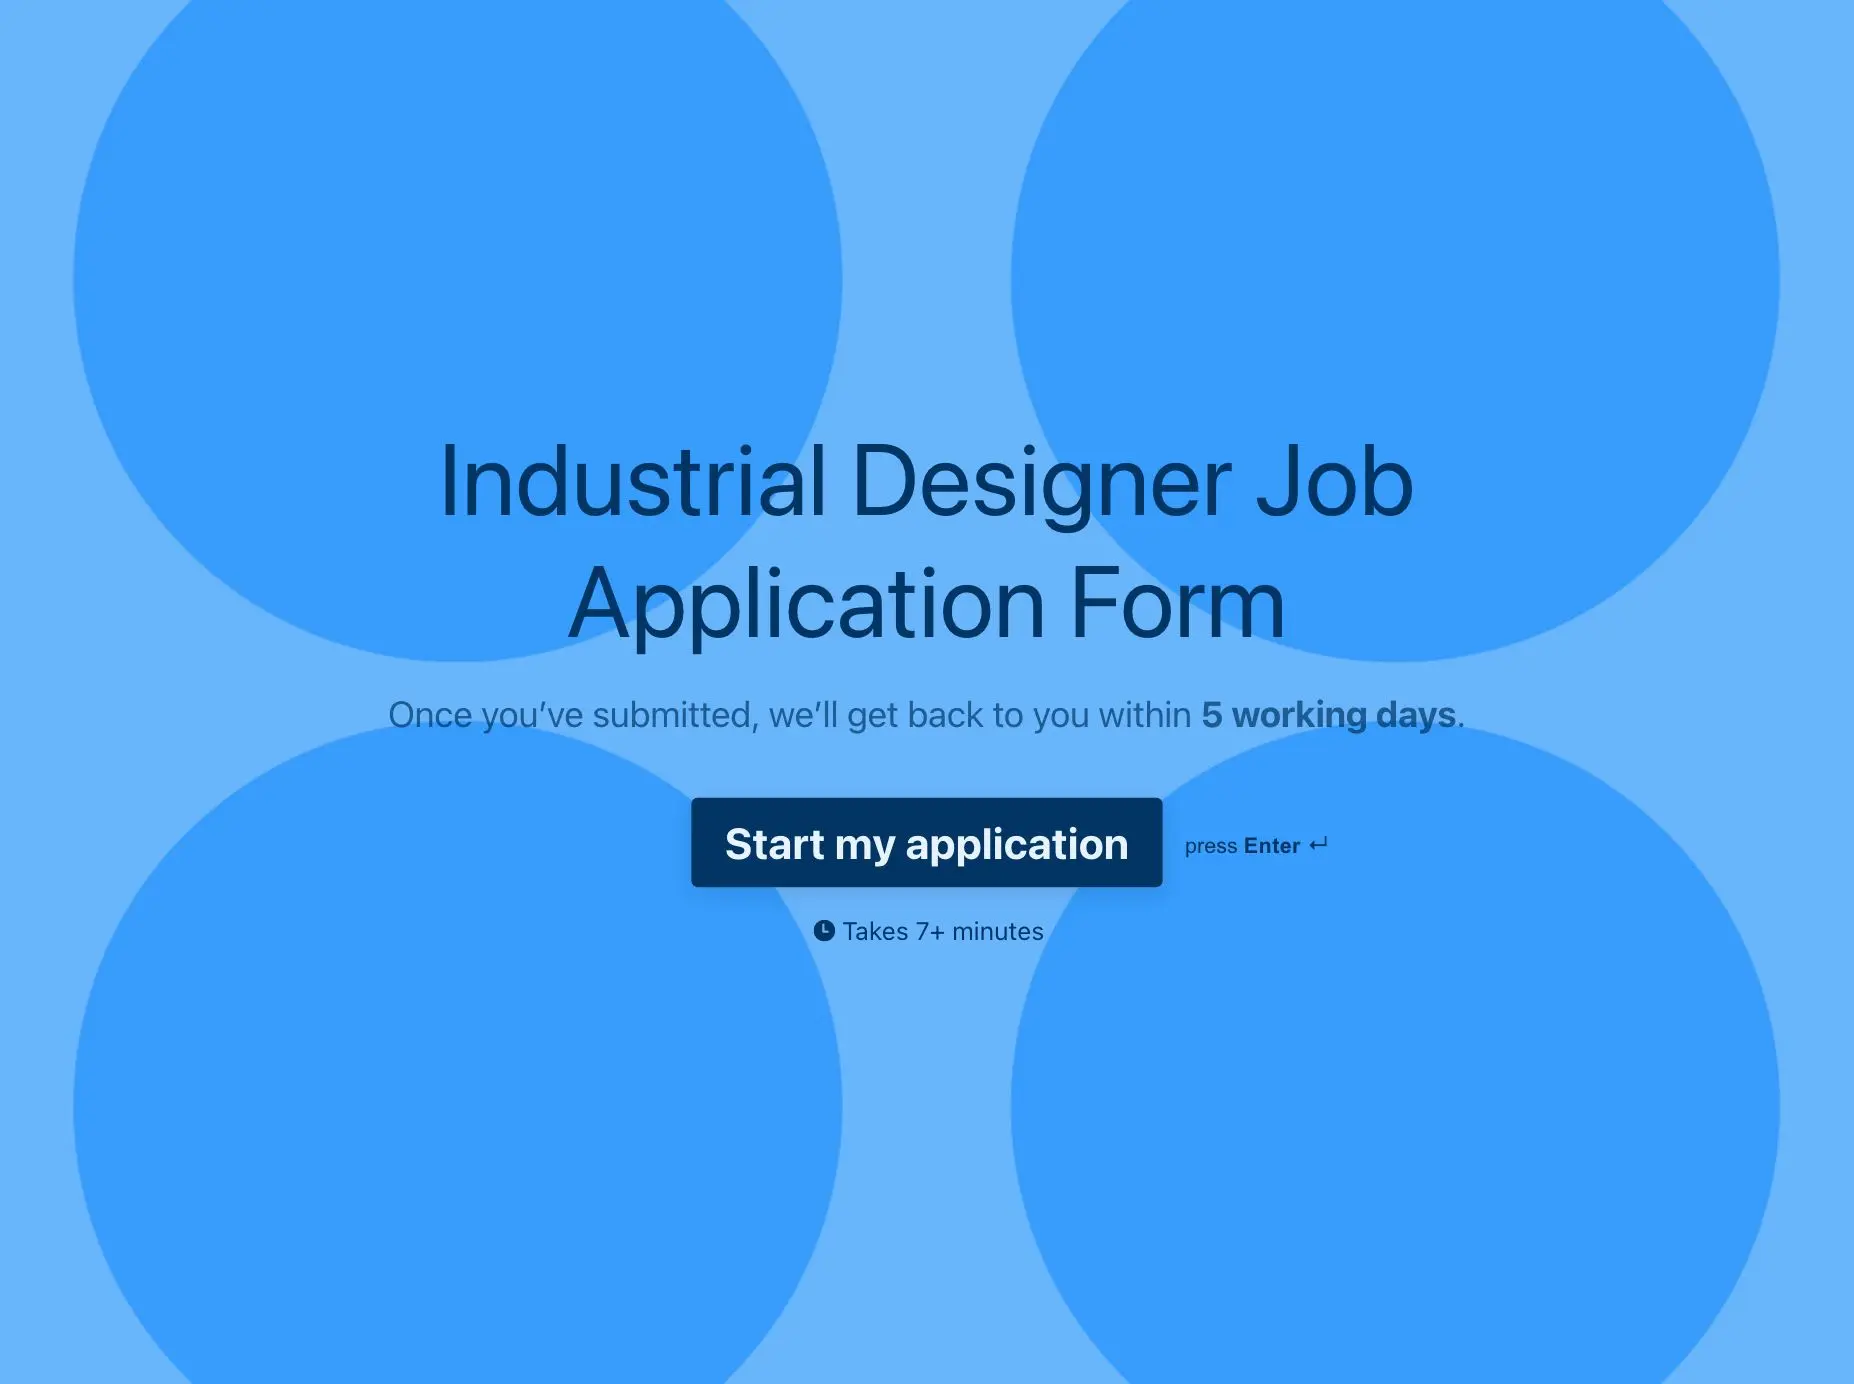 Industrial Designer Job Application Form Template Hero